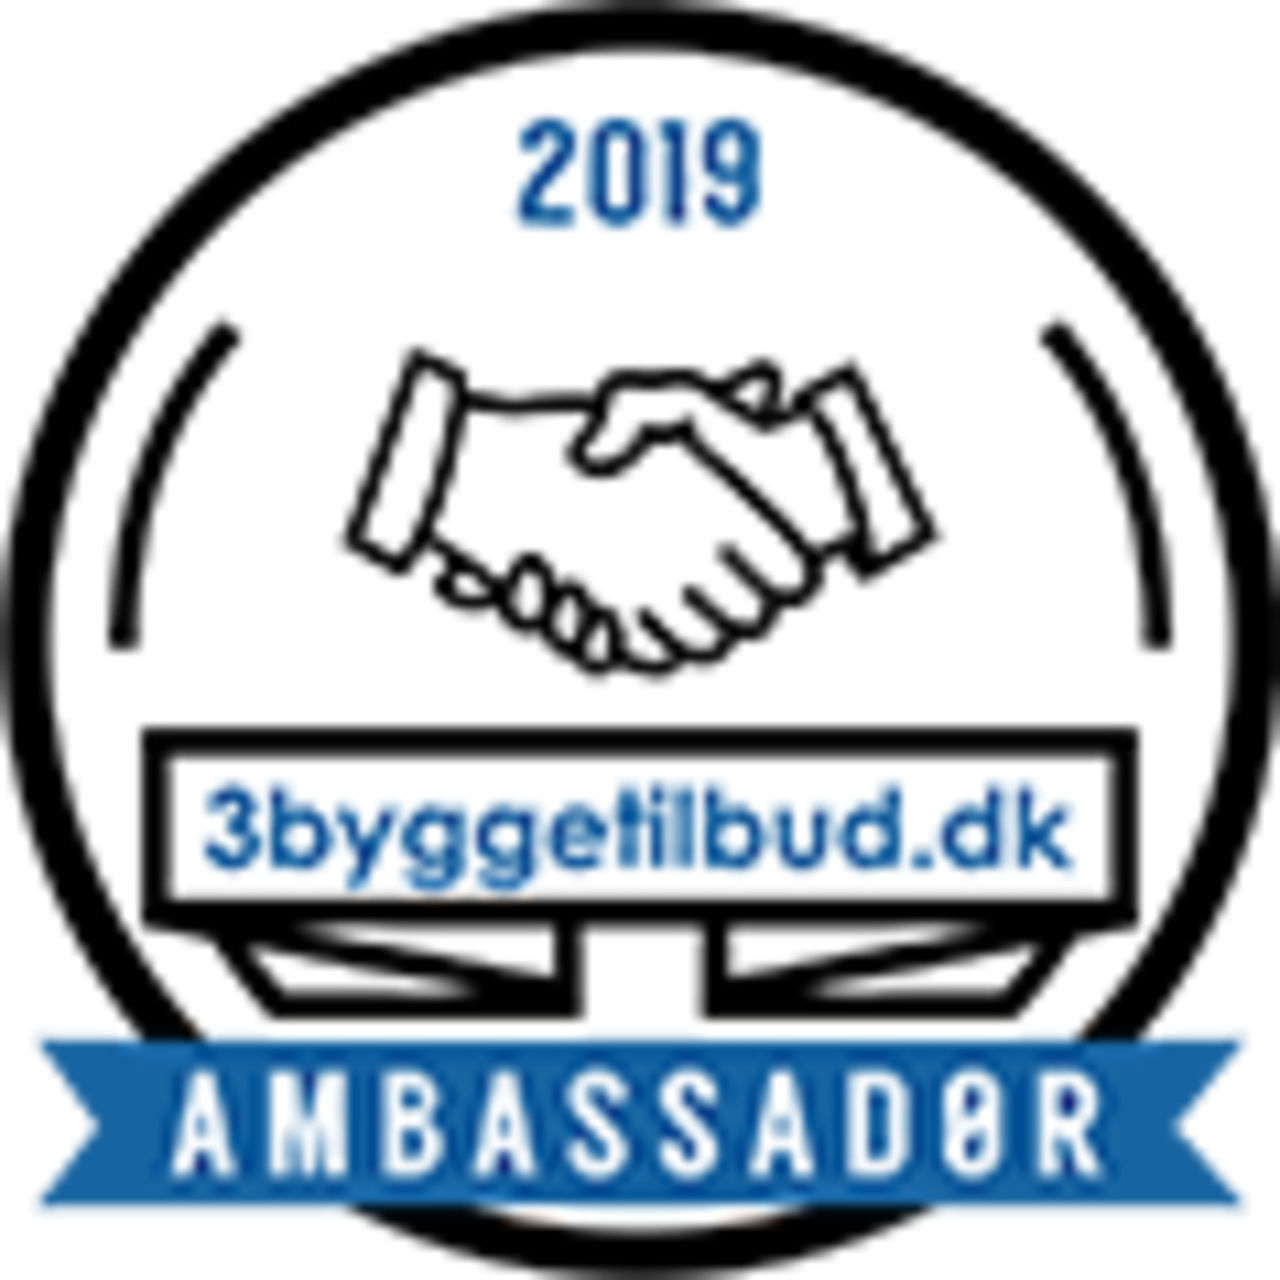 3byggetilbud 2019 ambassadør